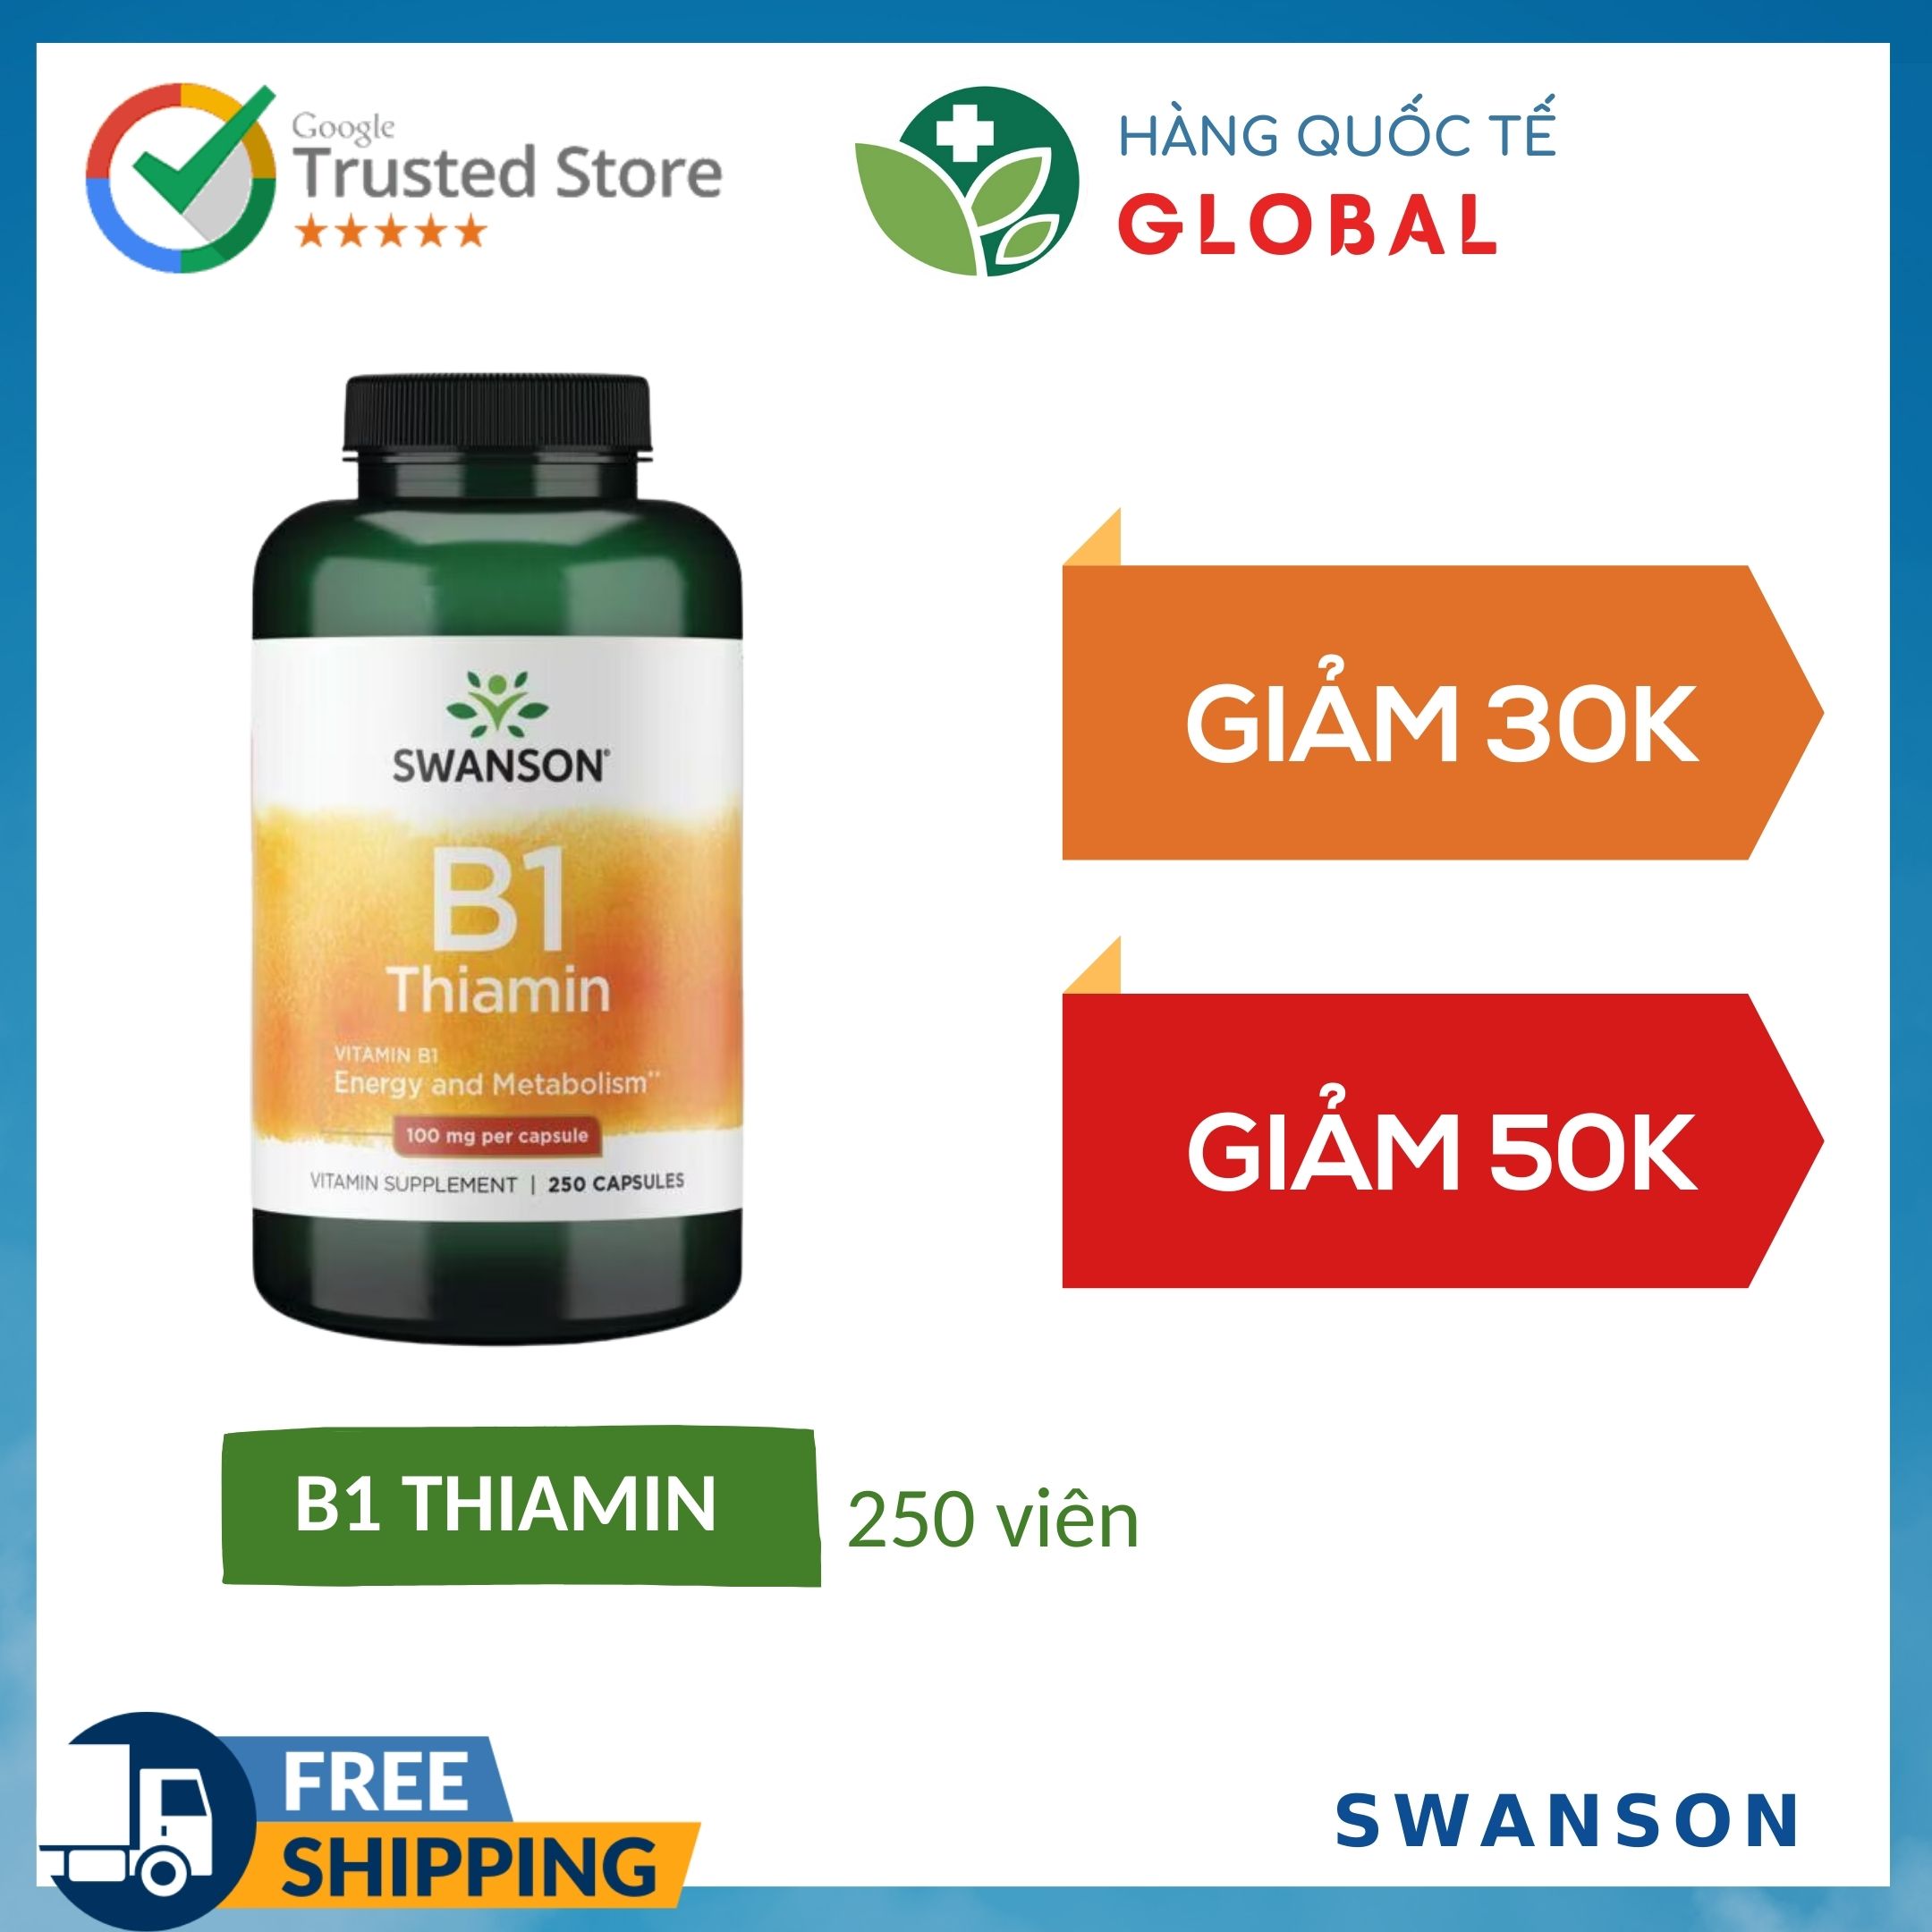 SWANSON B1 THIAMIN, 250 tablets, Vitamin B1 supplement pills